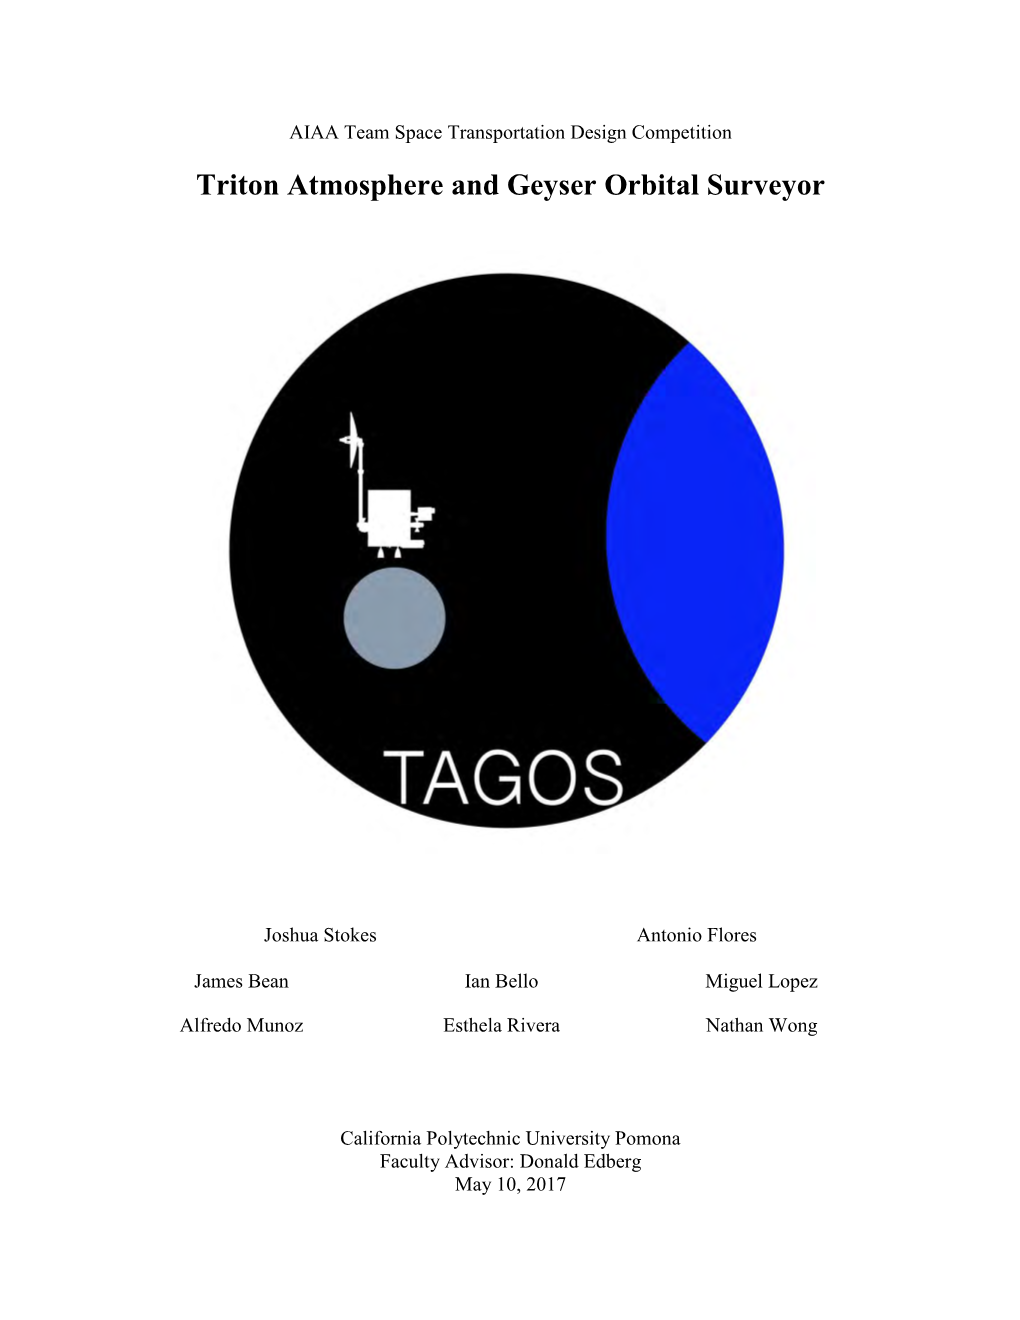 Triton Atmosphere and Geyser Orbital Surveyor